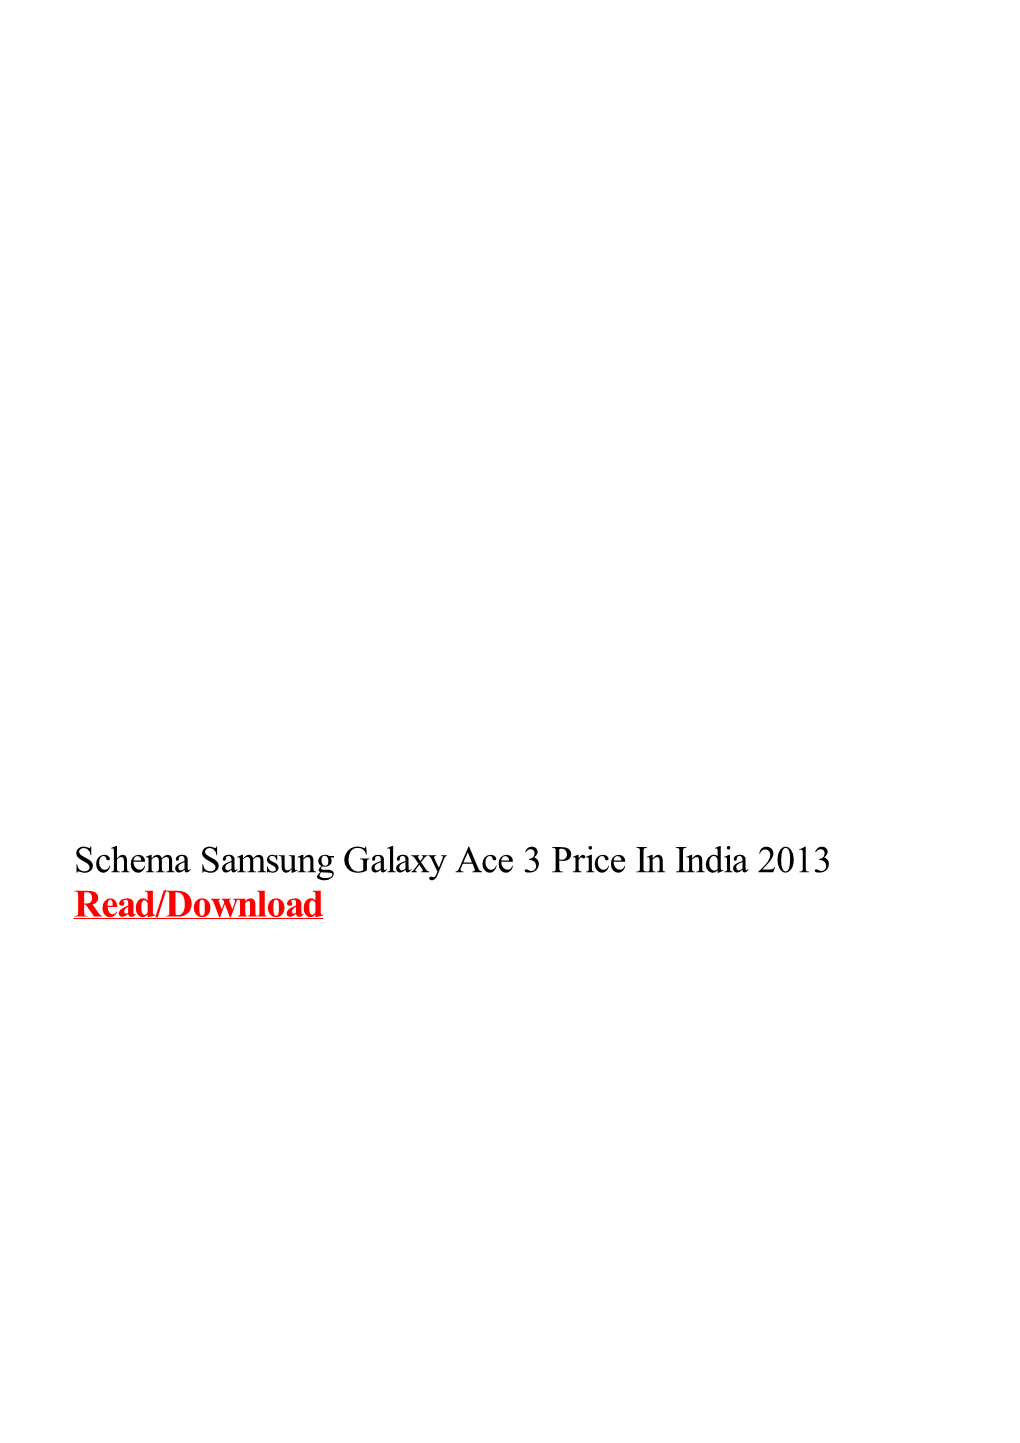 Schema Samsung Galaxy Ace 3 Price in India 2013